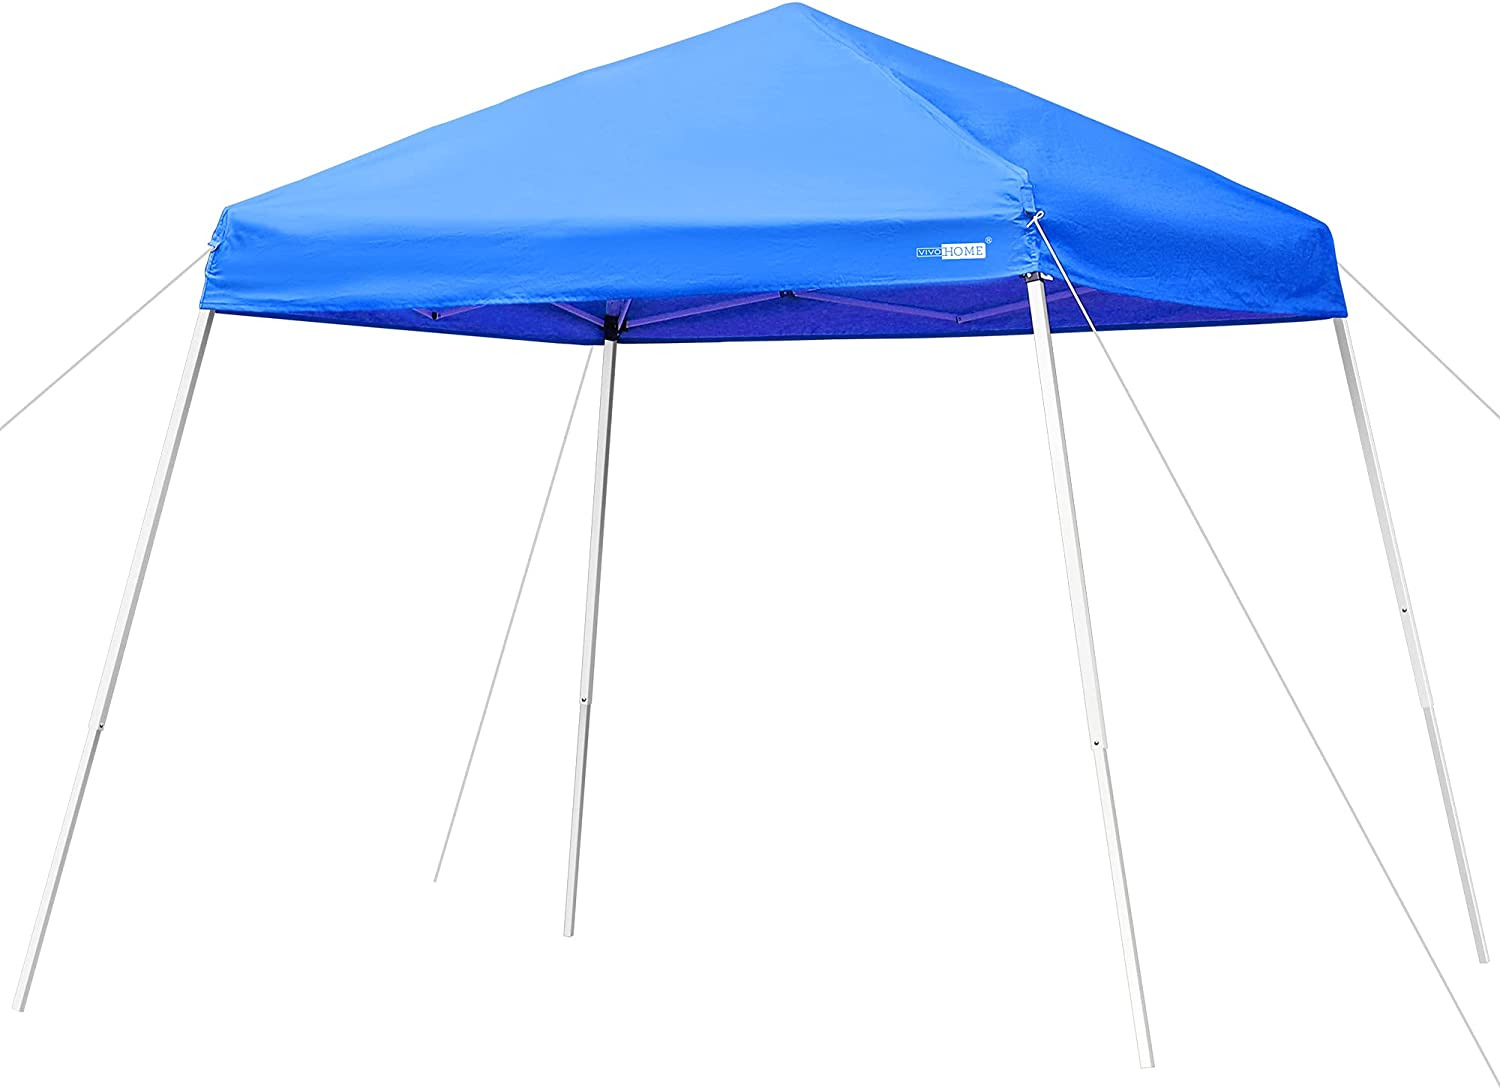 Slant Leg Outdoor Easy Pop up Canopy Party Tent Blue 8 X 8 Feet